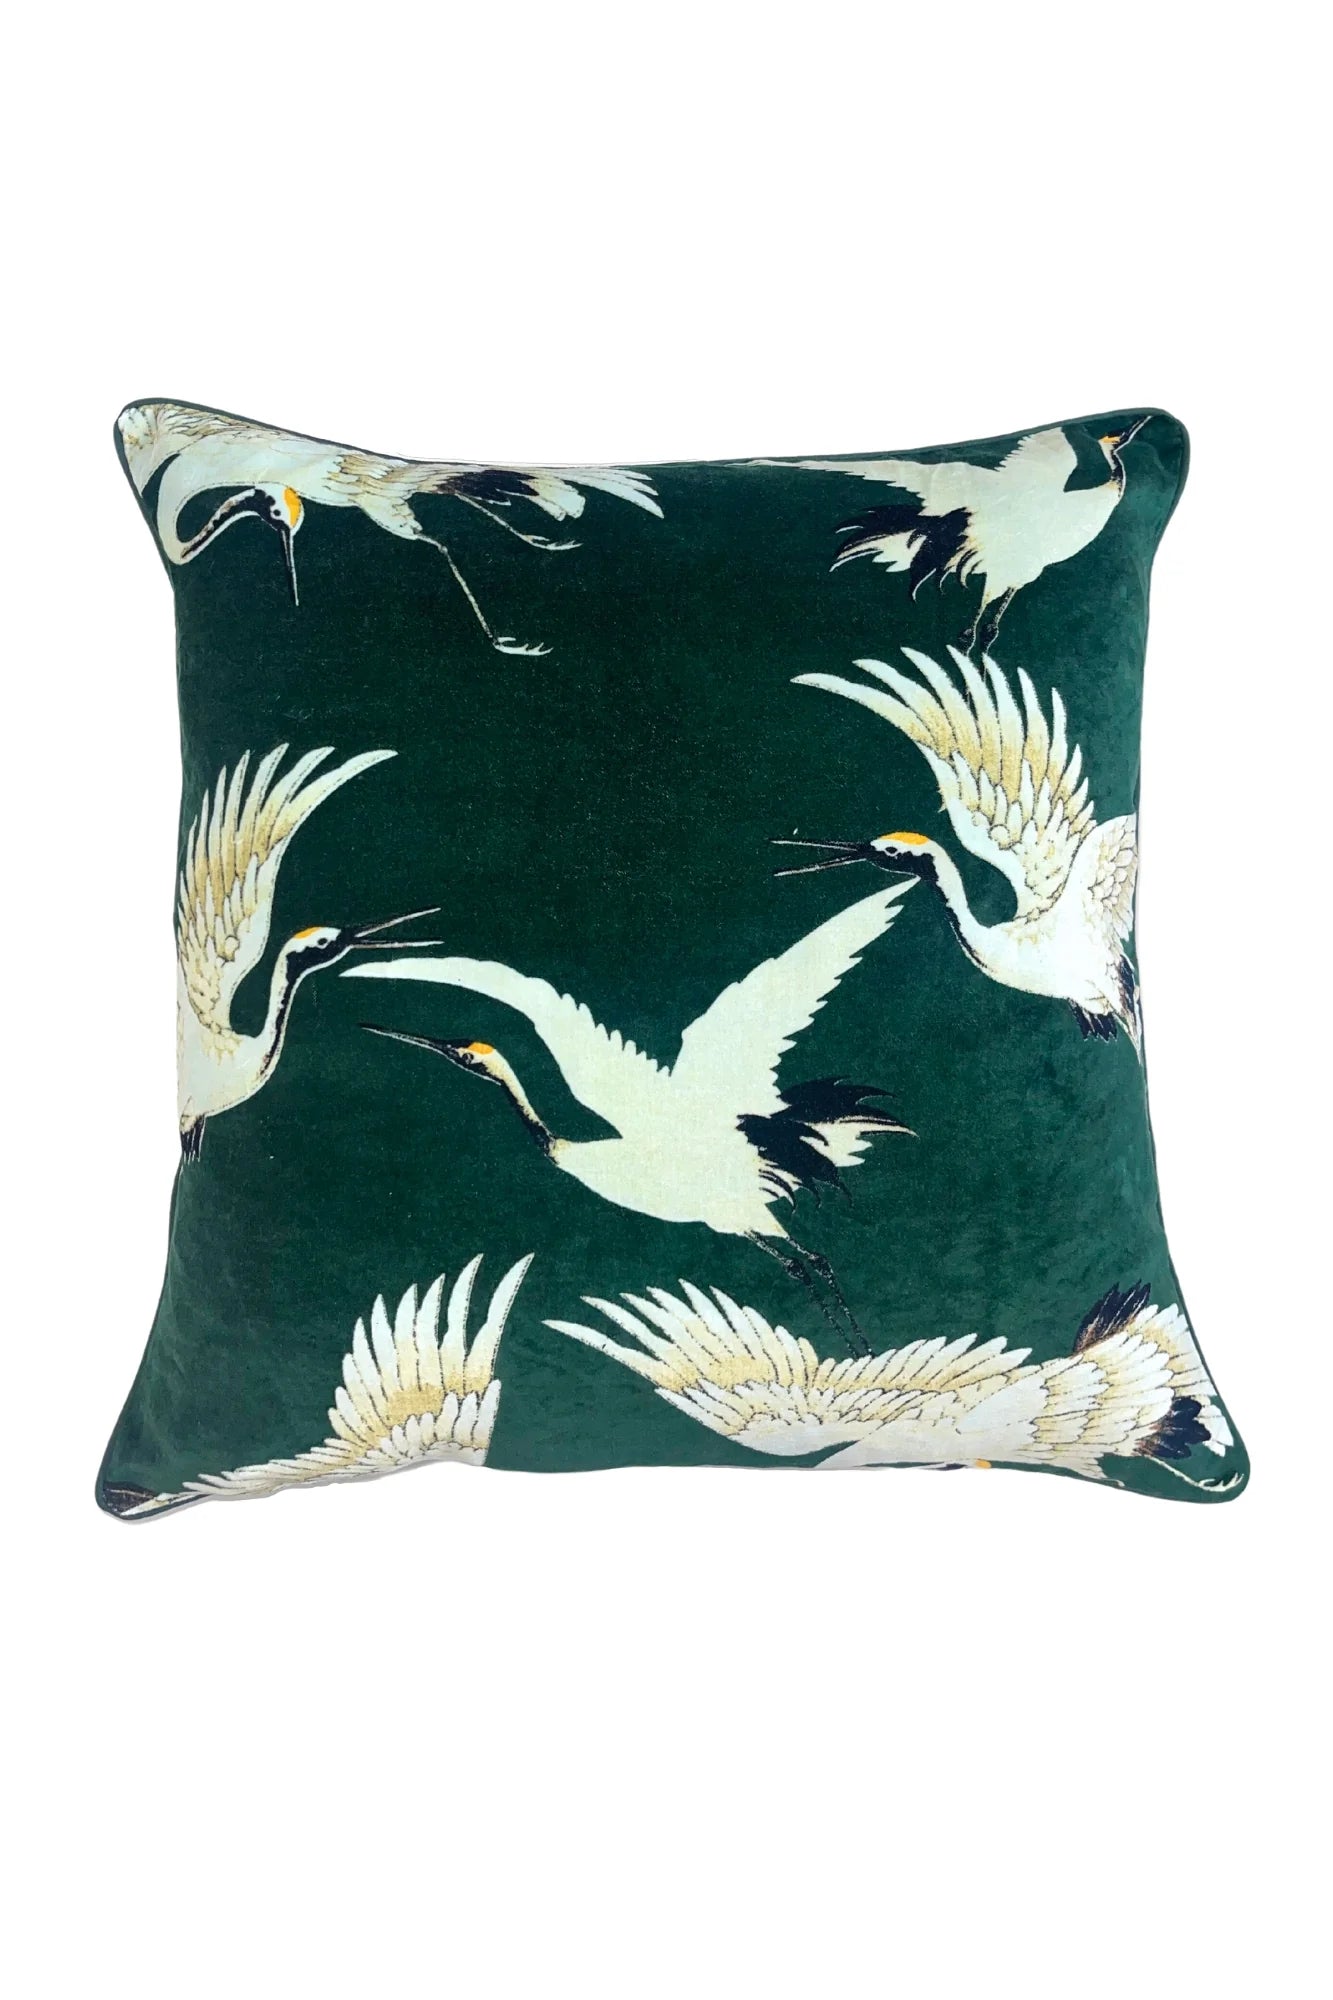 Forest Green Stork Cushion - The Nancy Smillie Shop - Art, Jewellery & Designer Gifts Glasgow